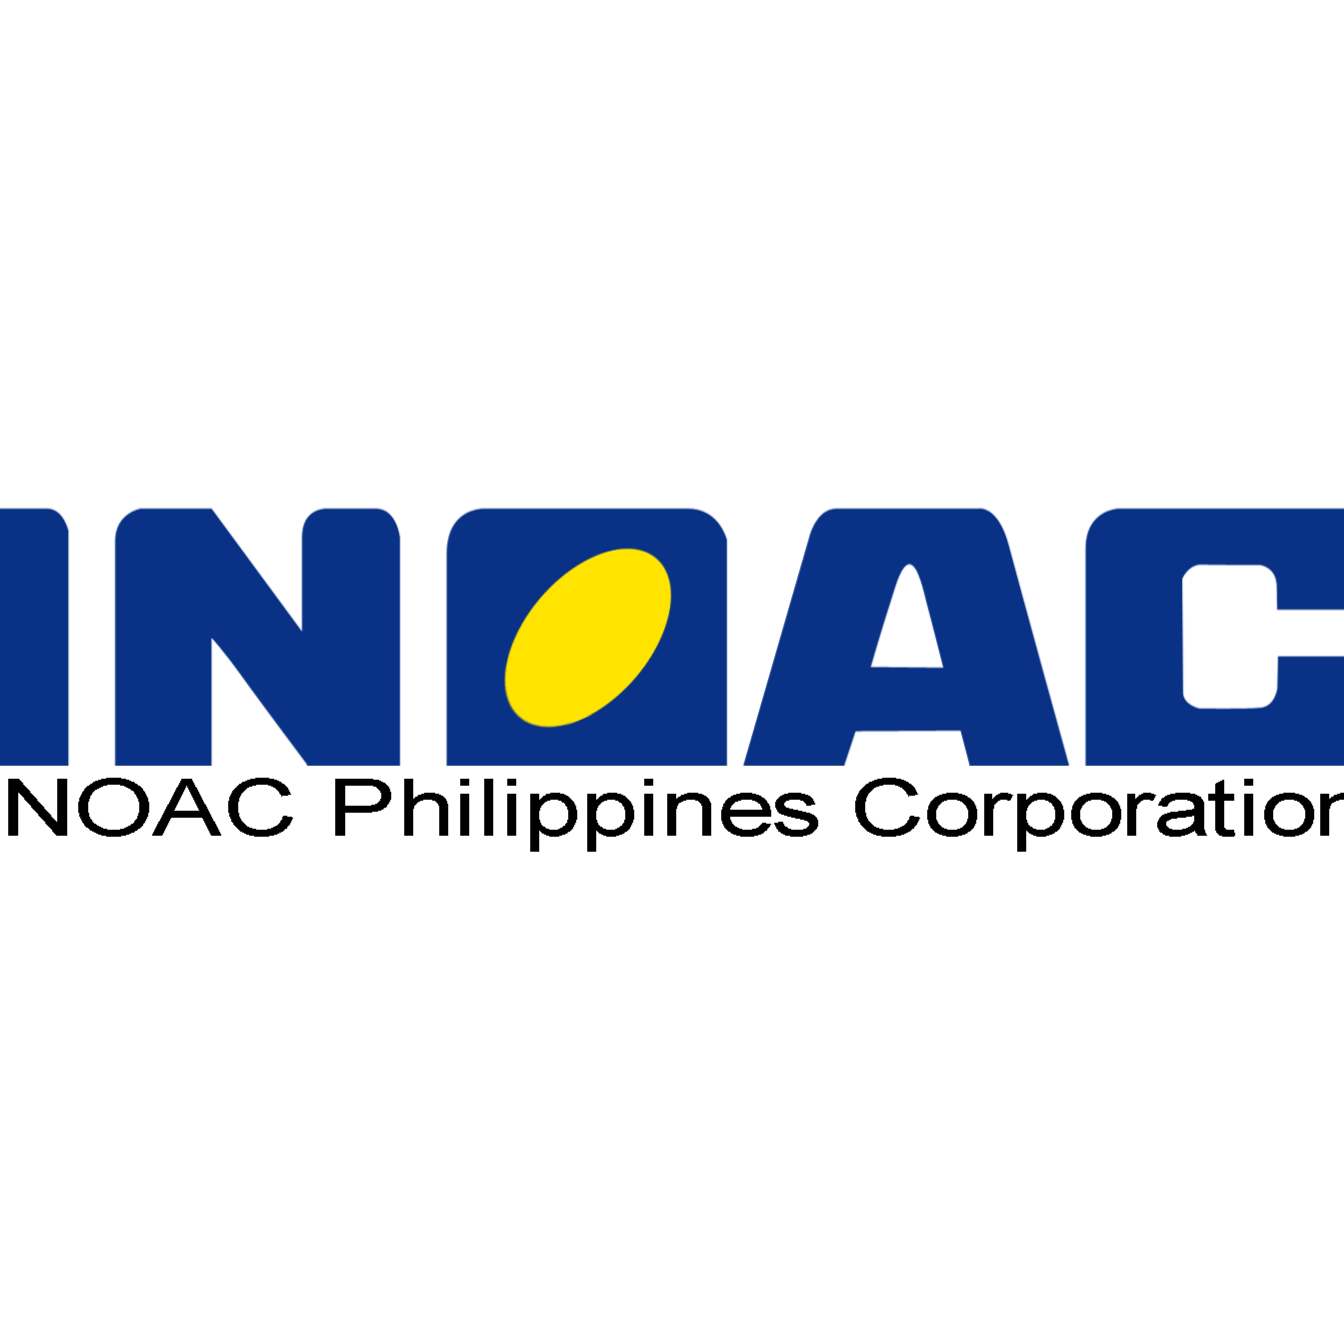 INOAC Phils. Corporation Careers in Philippines, Job Opportunities ...